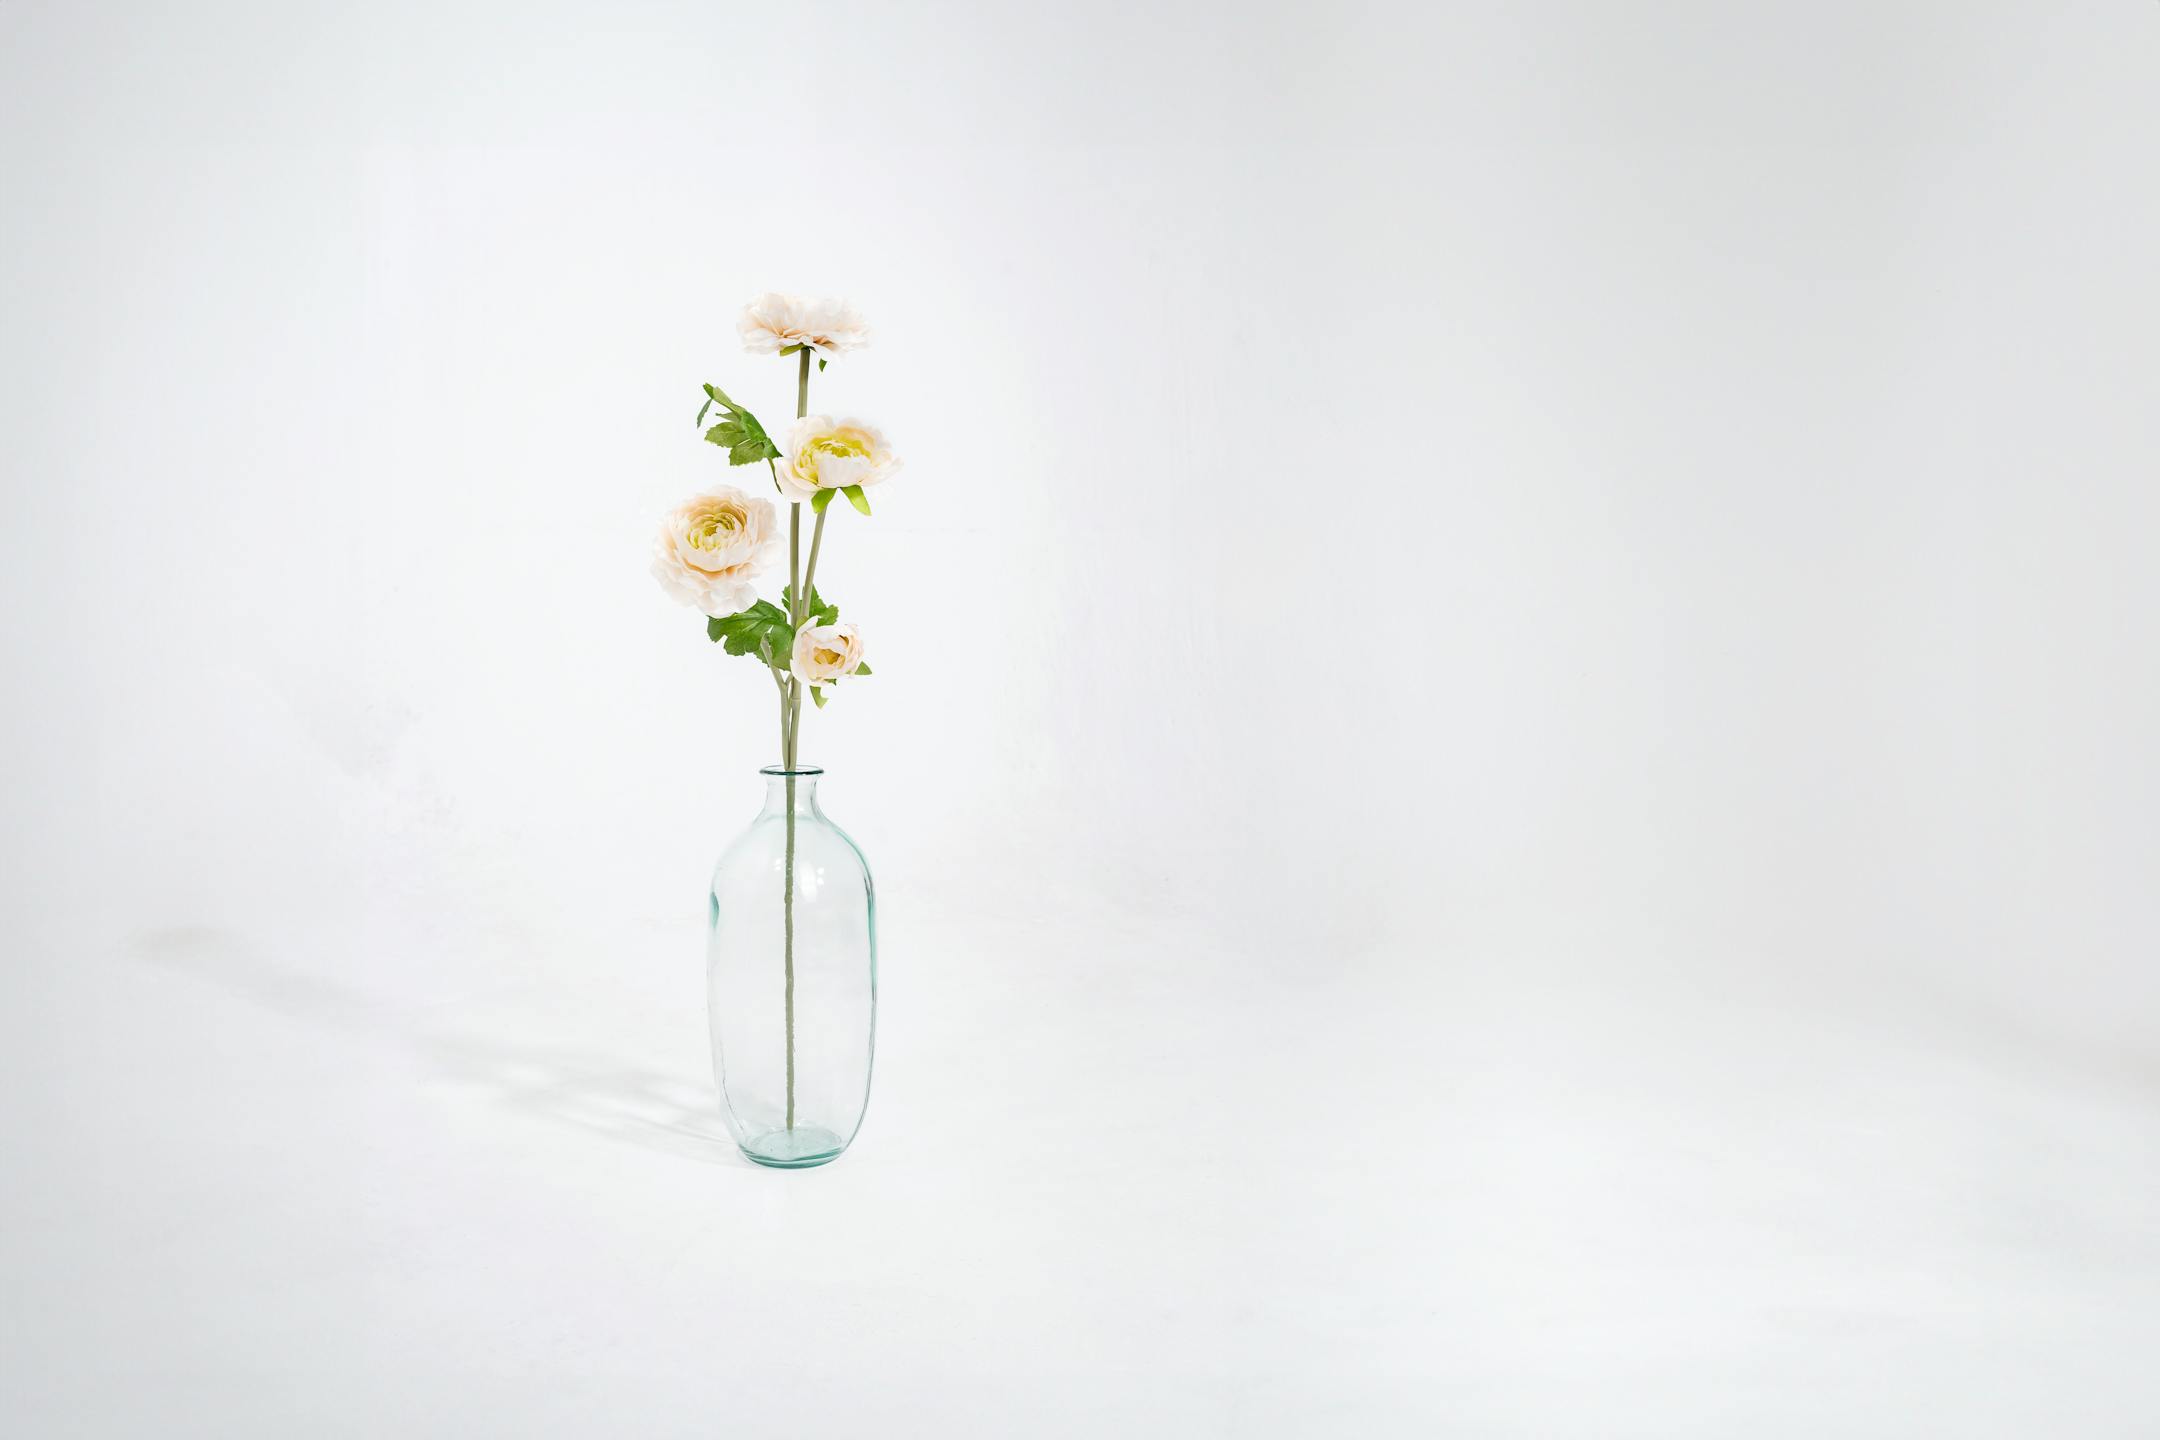 Cream artificial ranunculous stem in glass vase